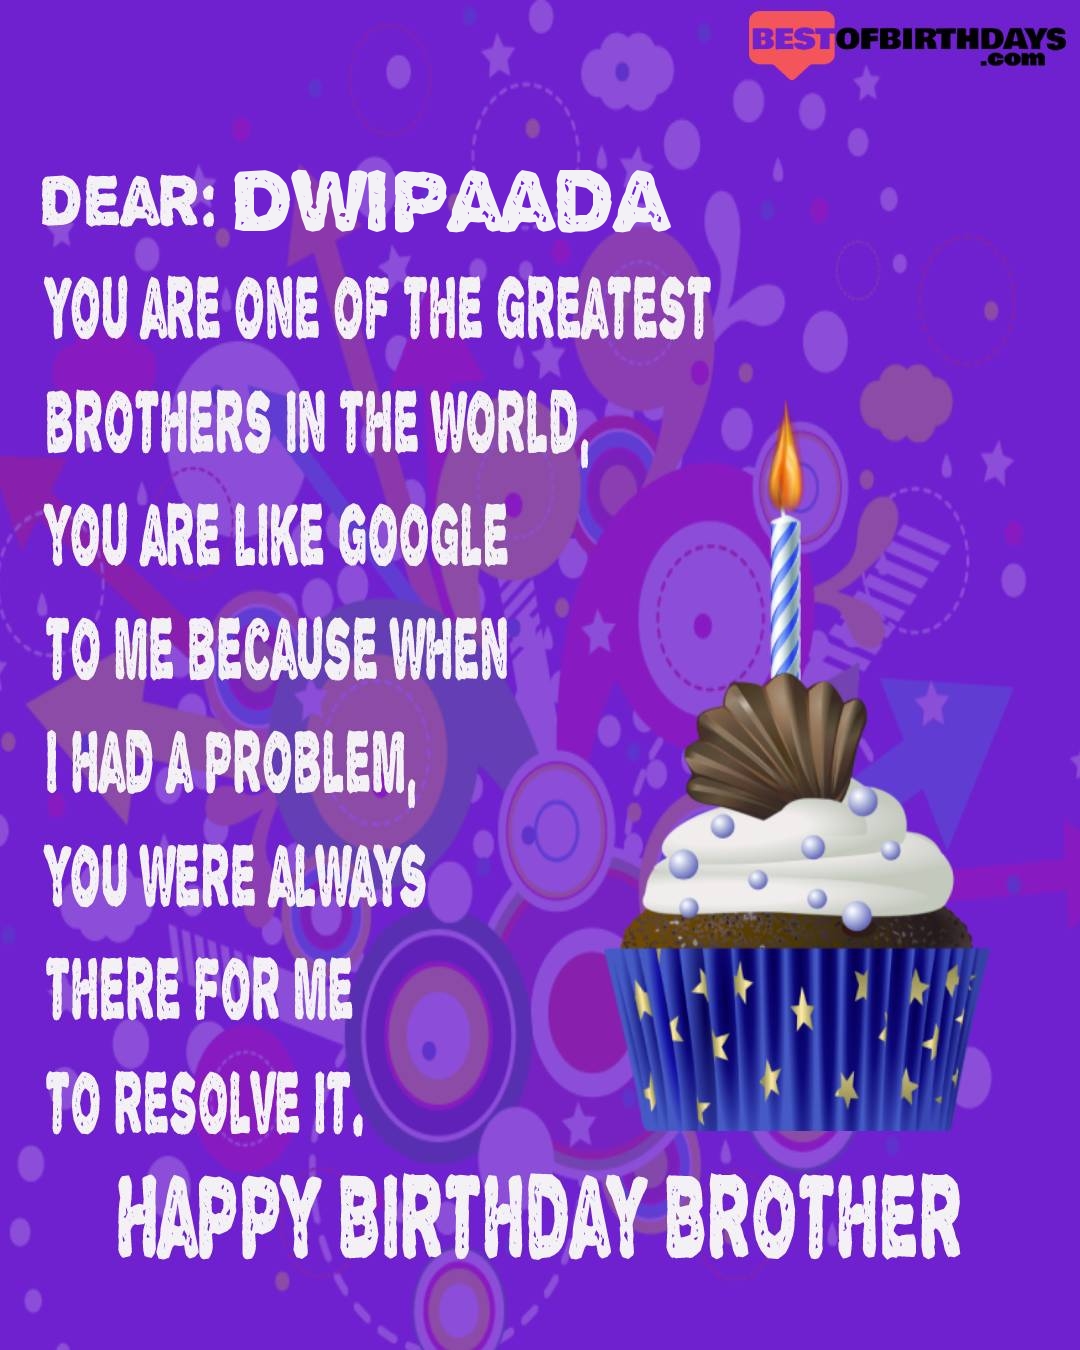 Happy birthday dwipaada bhai brother bro